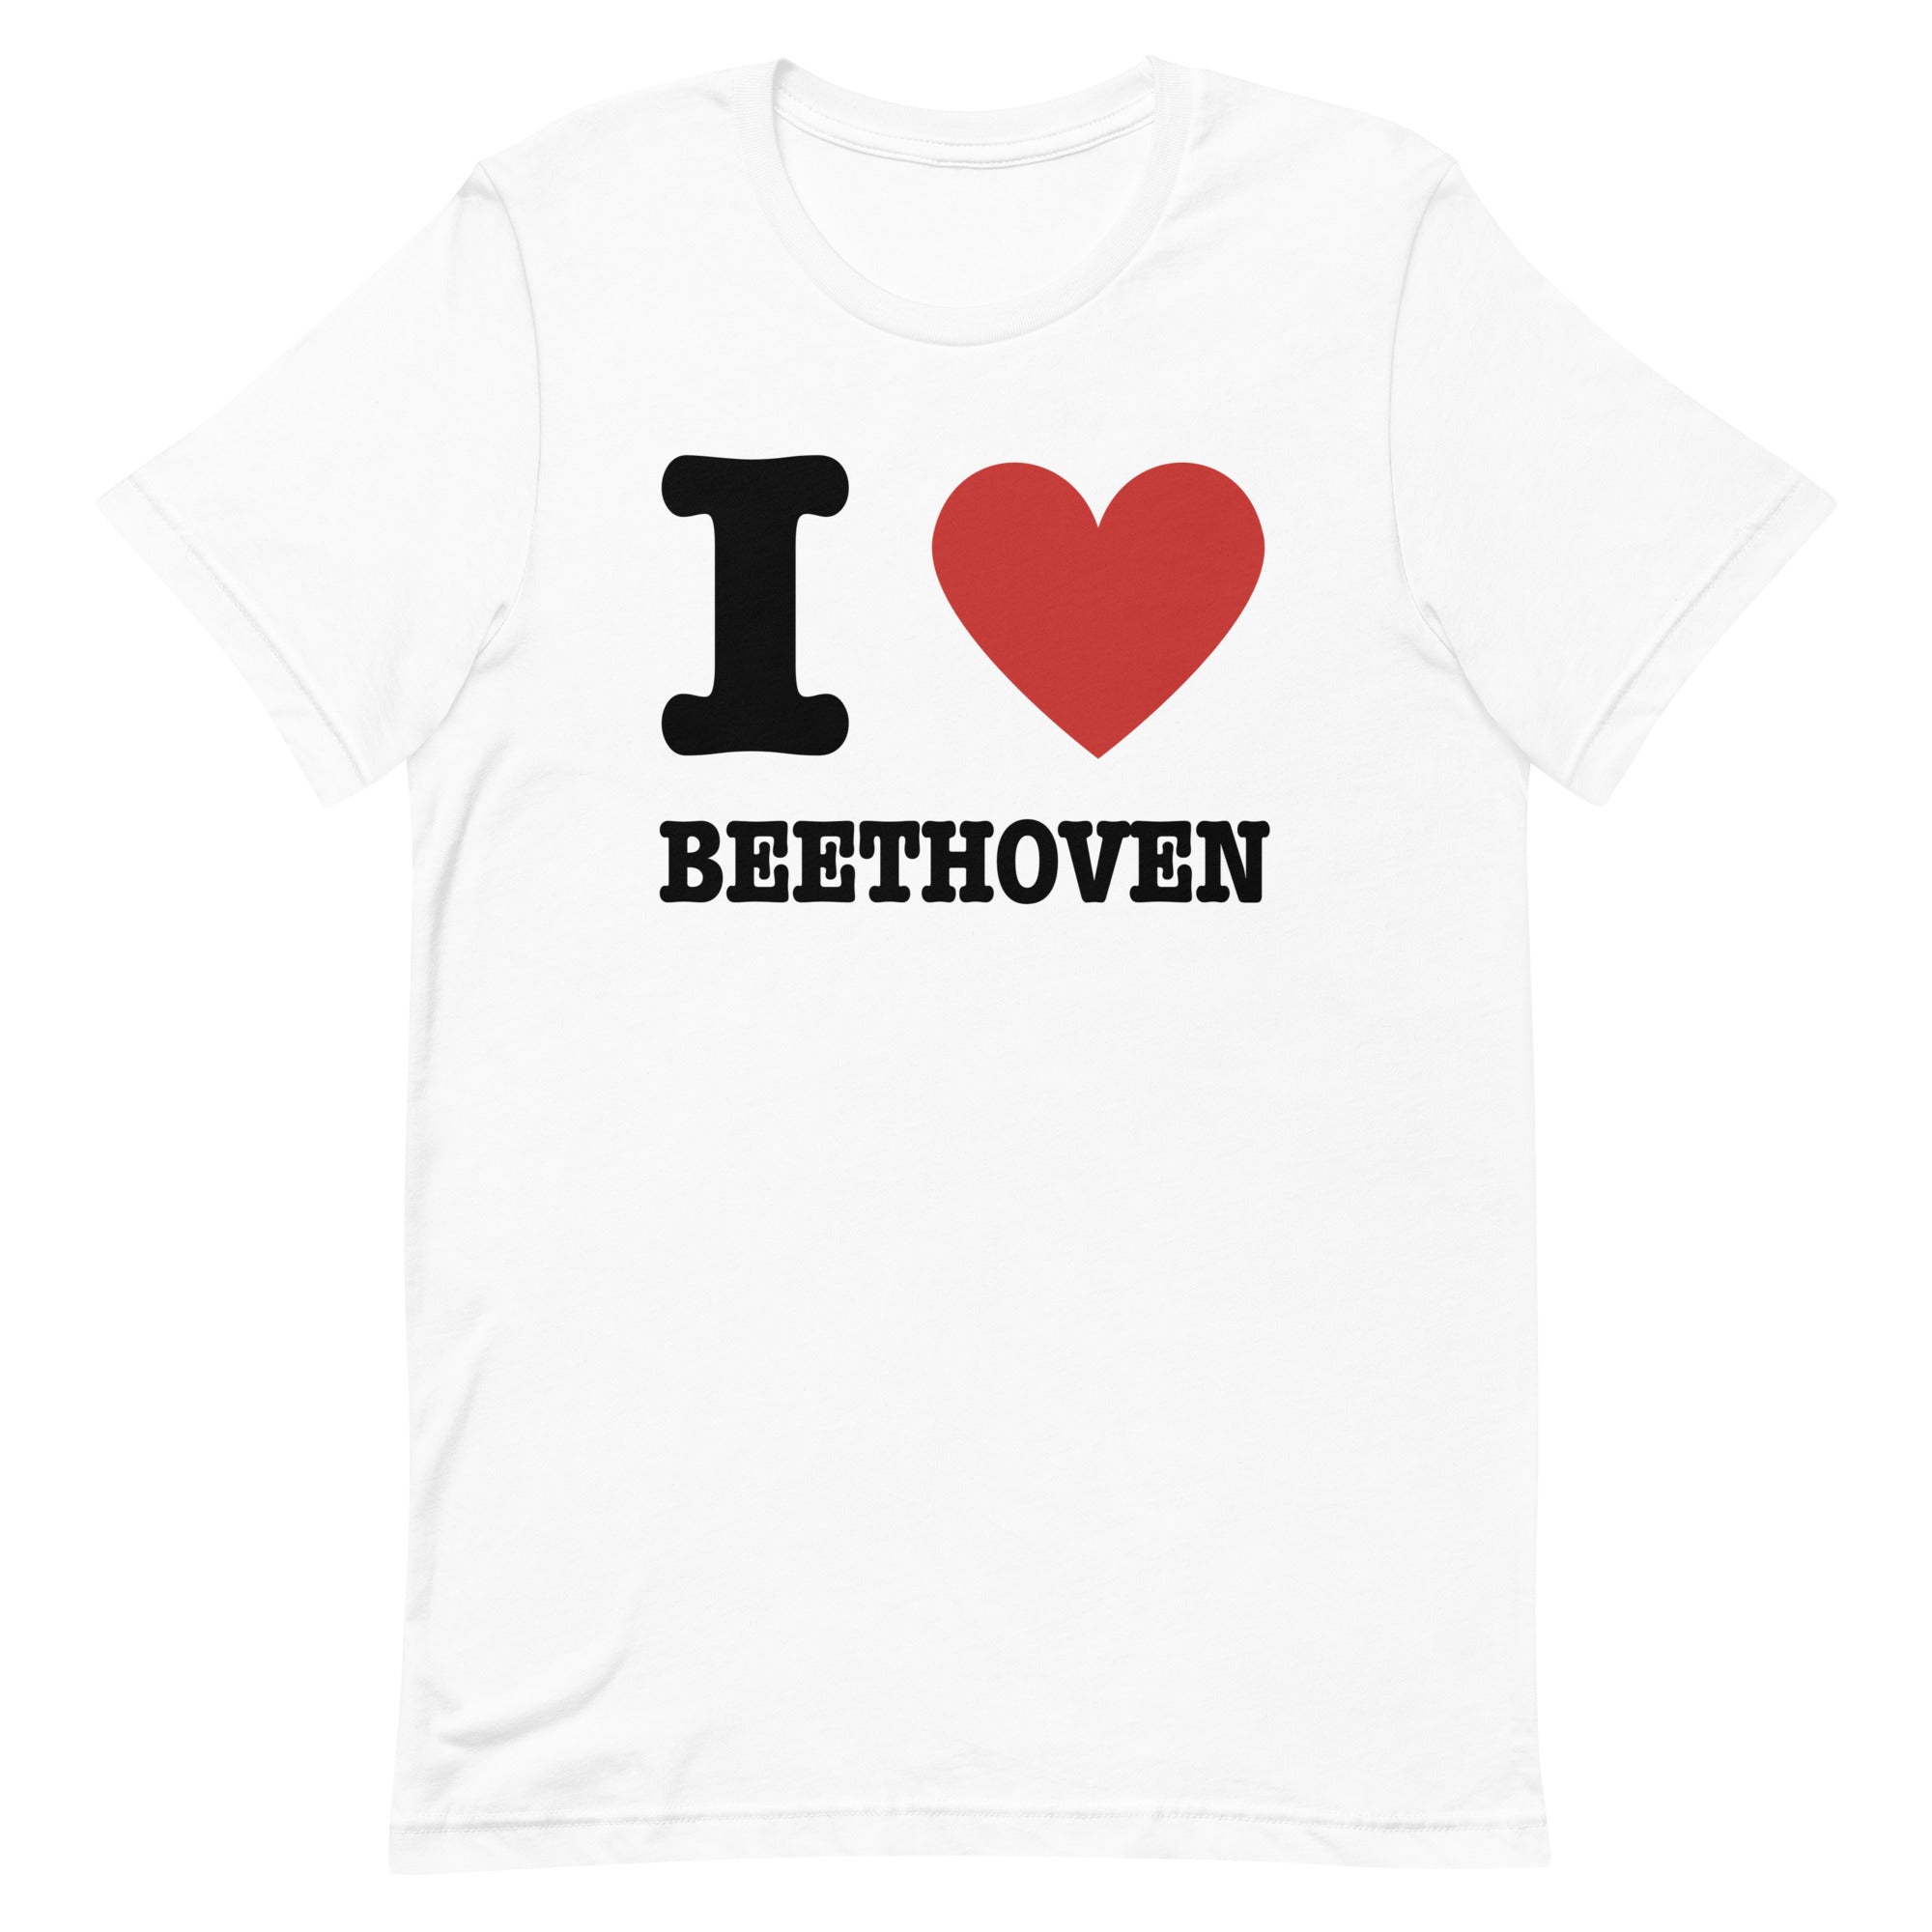 I Heart Beethoven T-Shirt